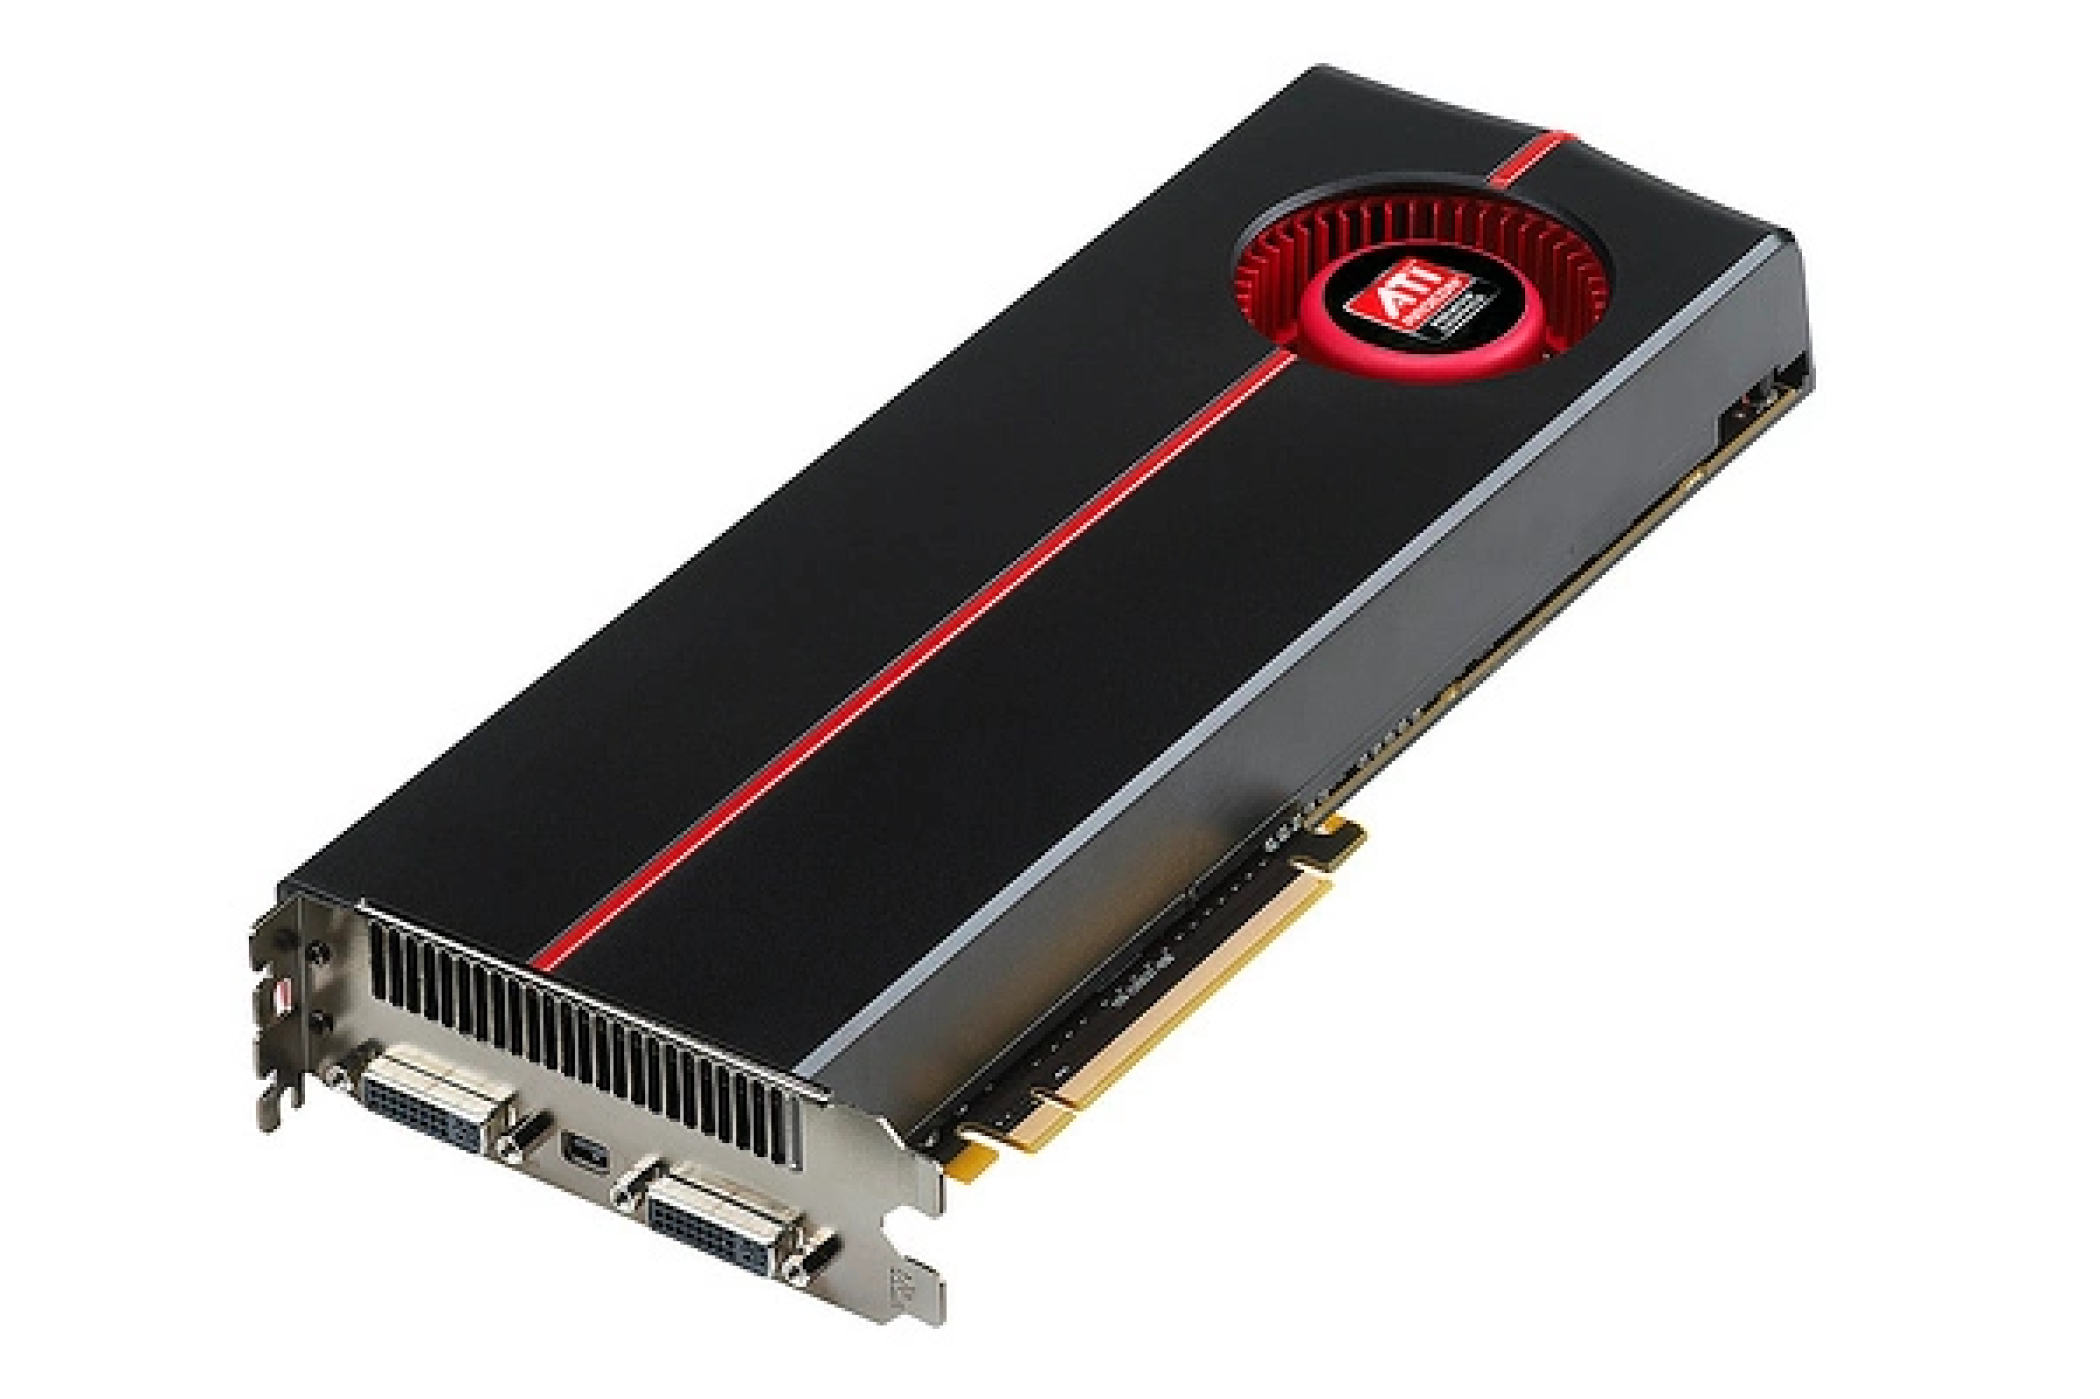 The AMD Radeon HD 5970 GPU.